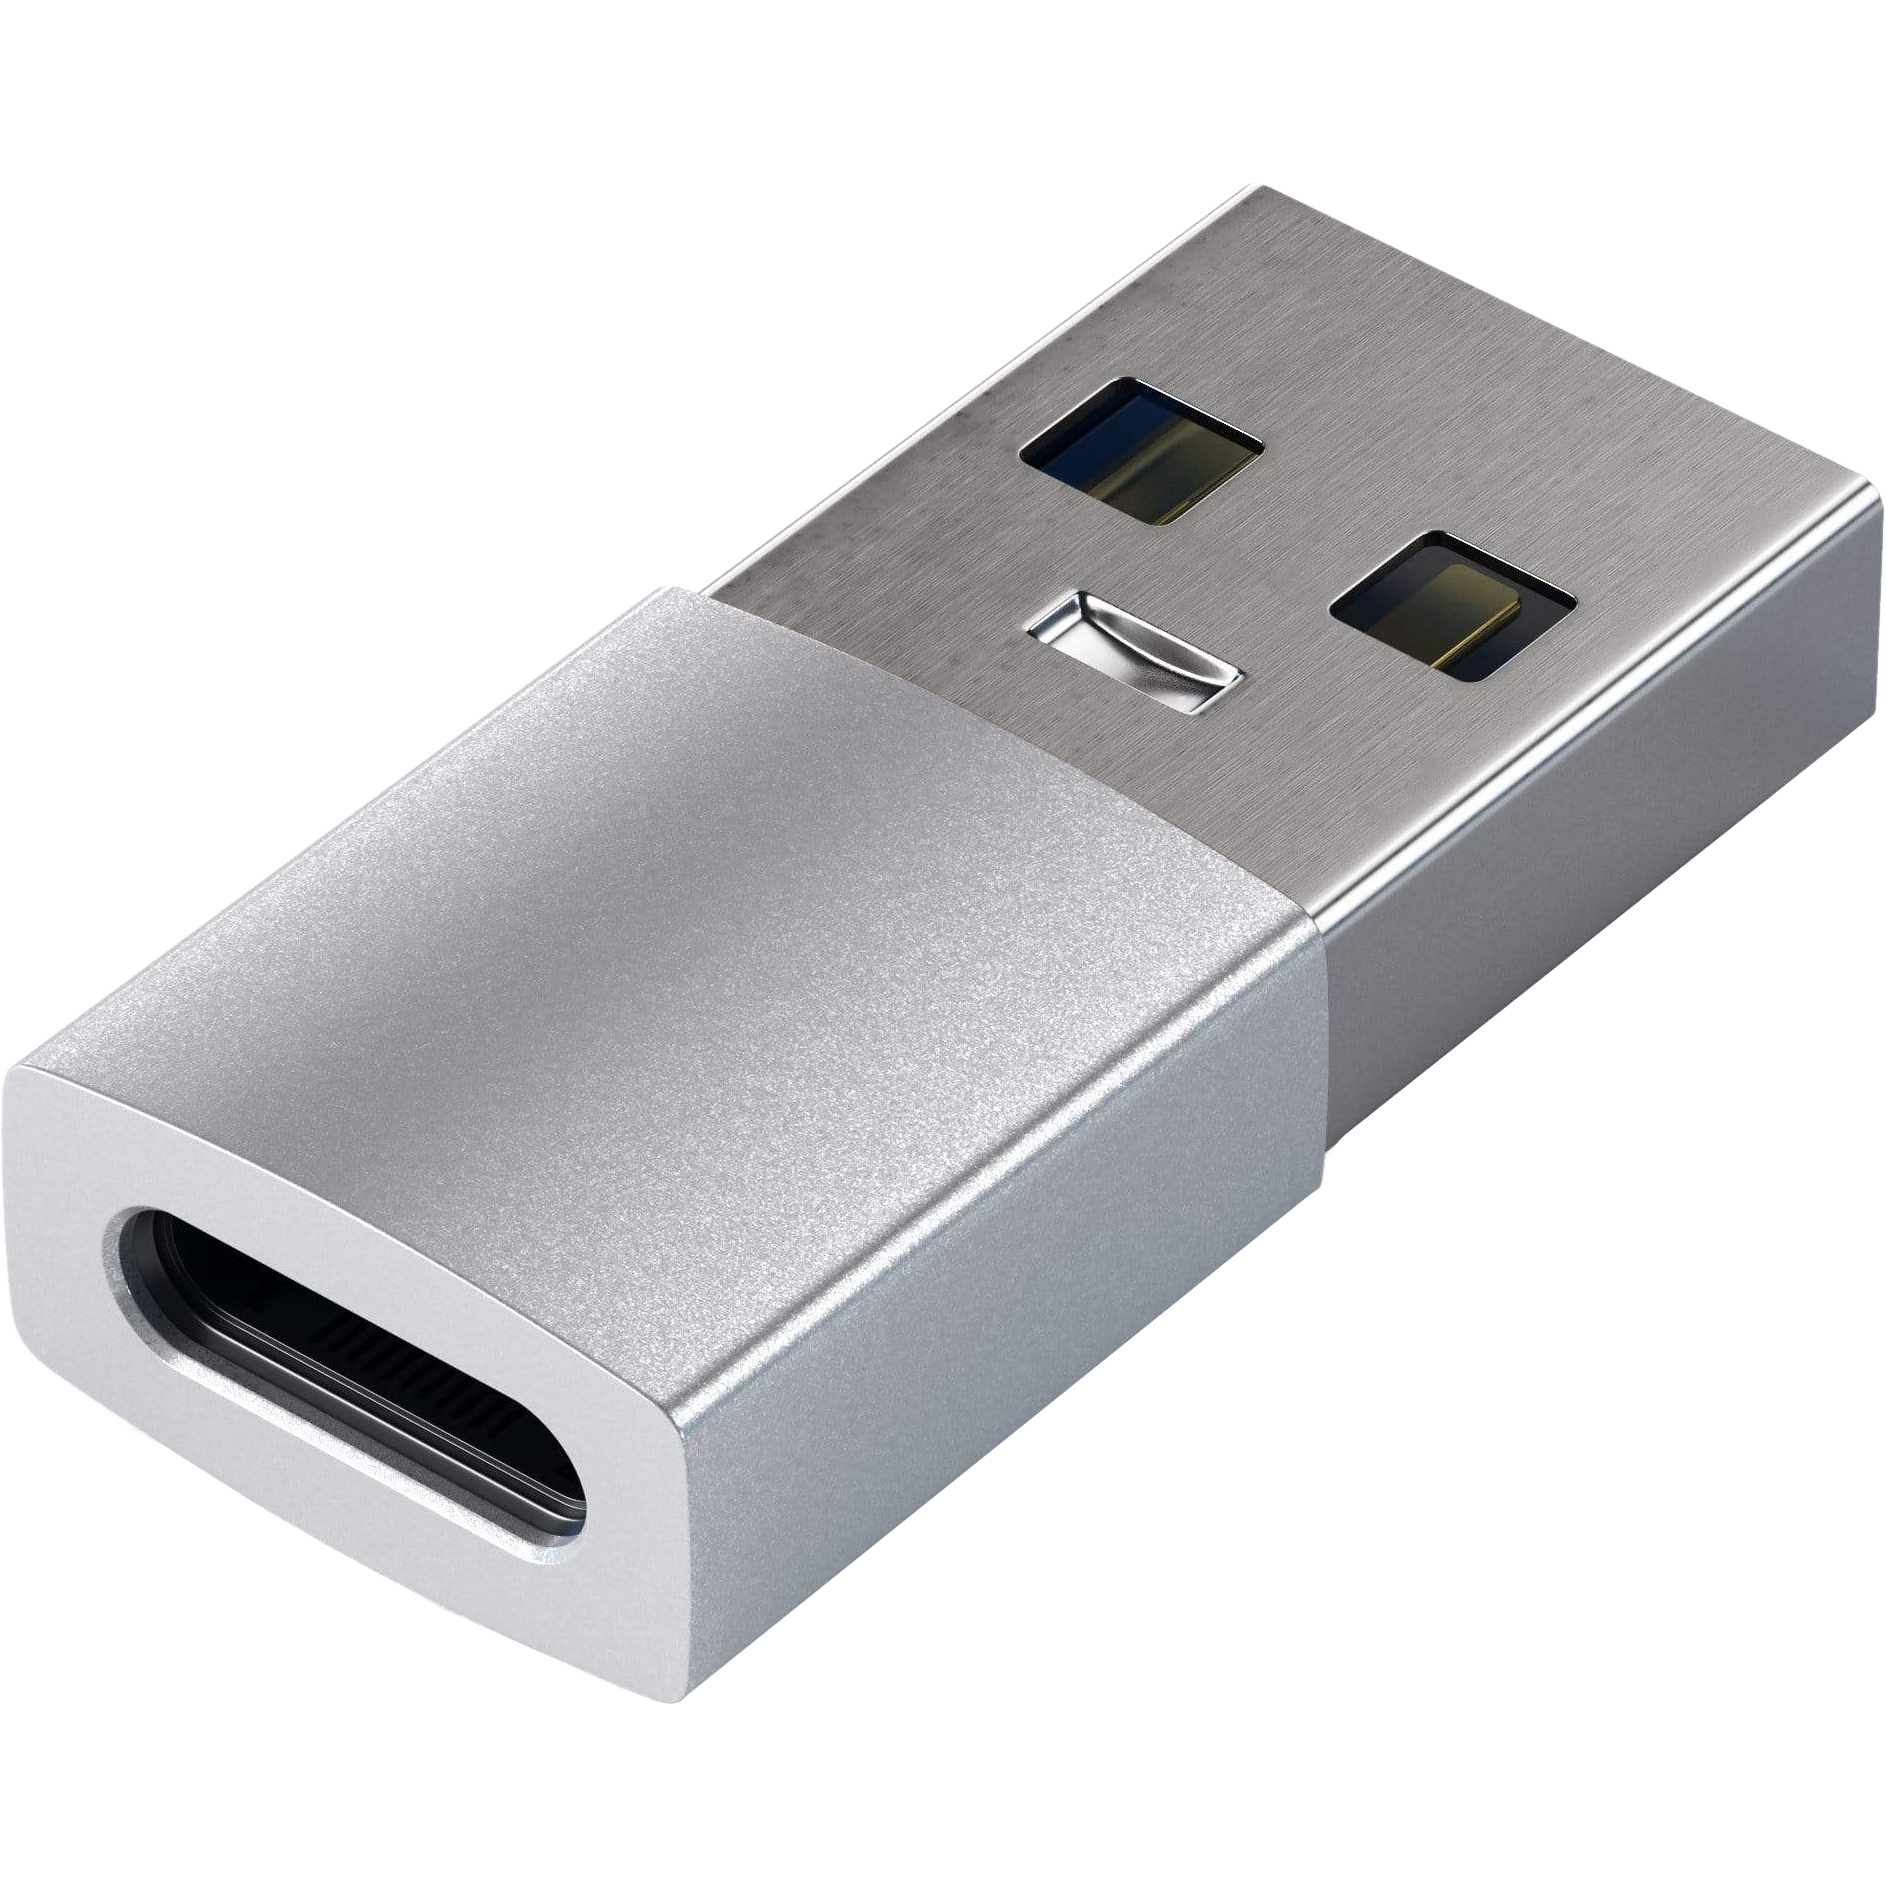 Переходник Satechi USB Type-A to Type-C серебристый переходник satechi st ucapdam usb type c audio pd charger adapter серый космос